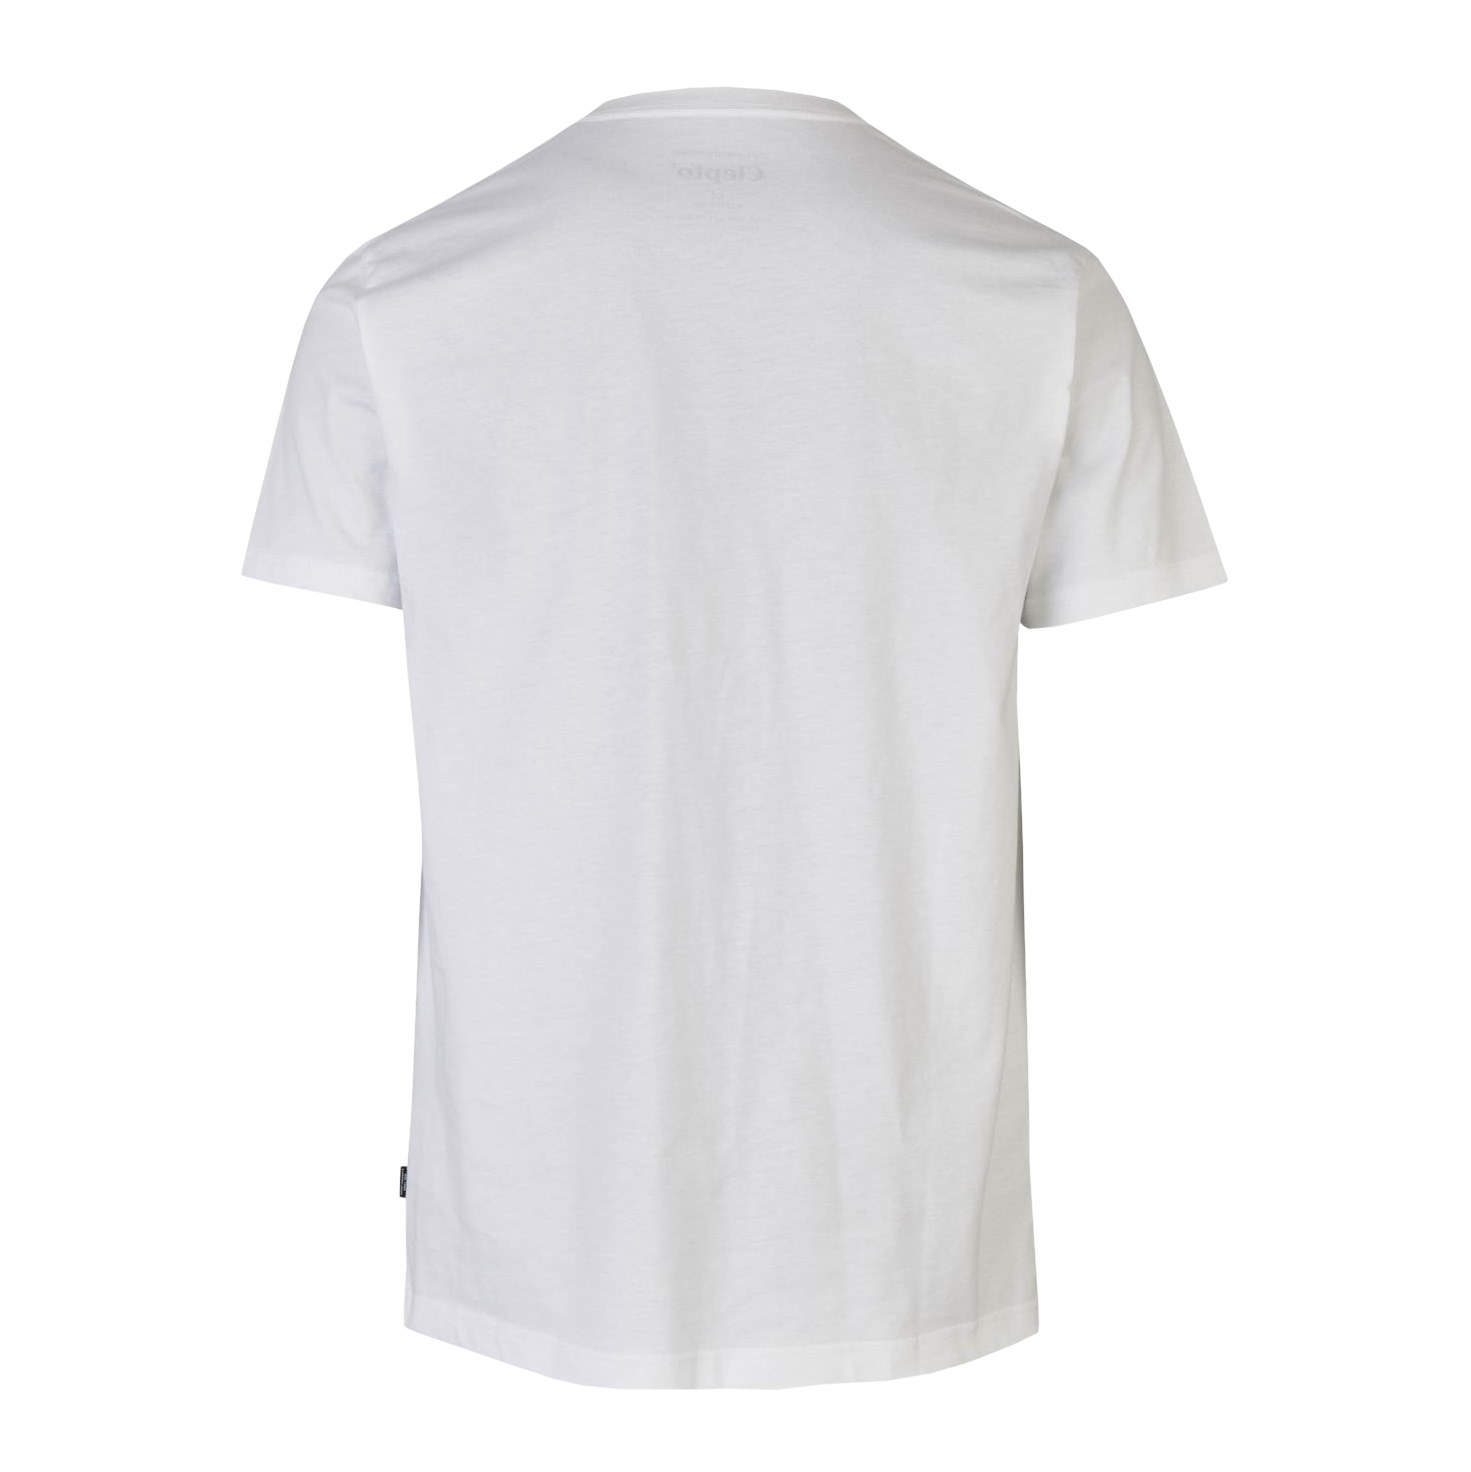 Cleptomanicx T-Shirt Embro Gull (white)